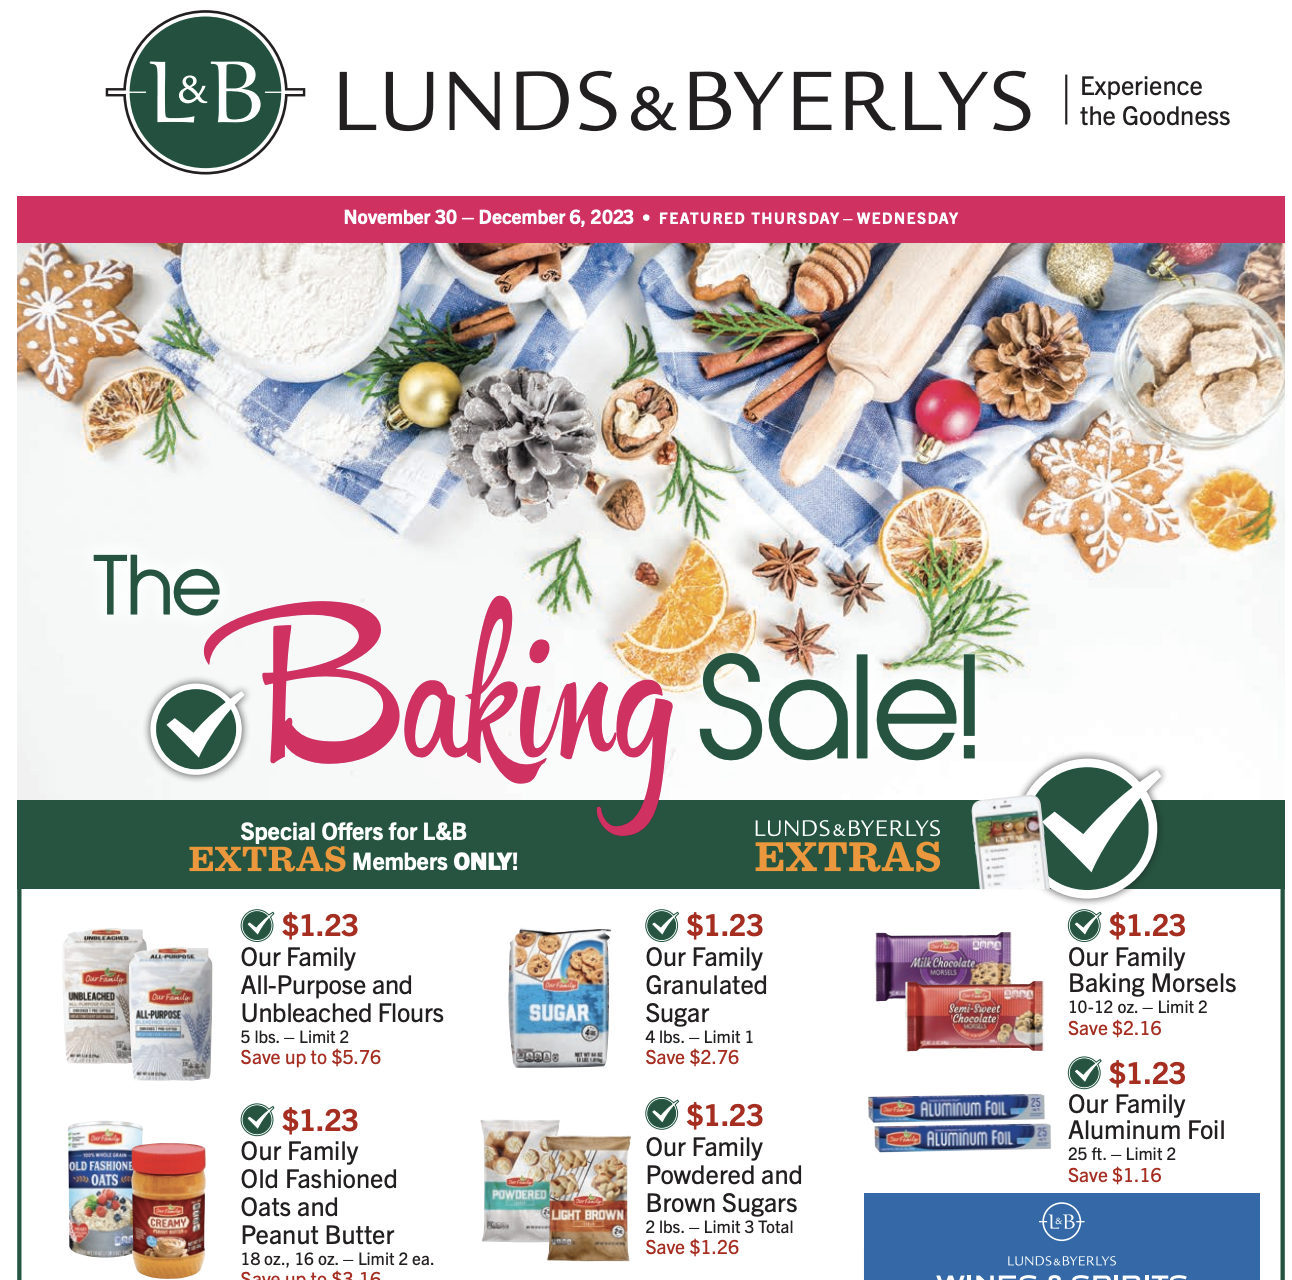 Lunds & Byerlys Baking Sale.